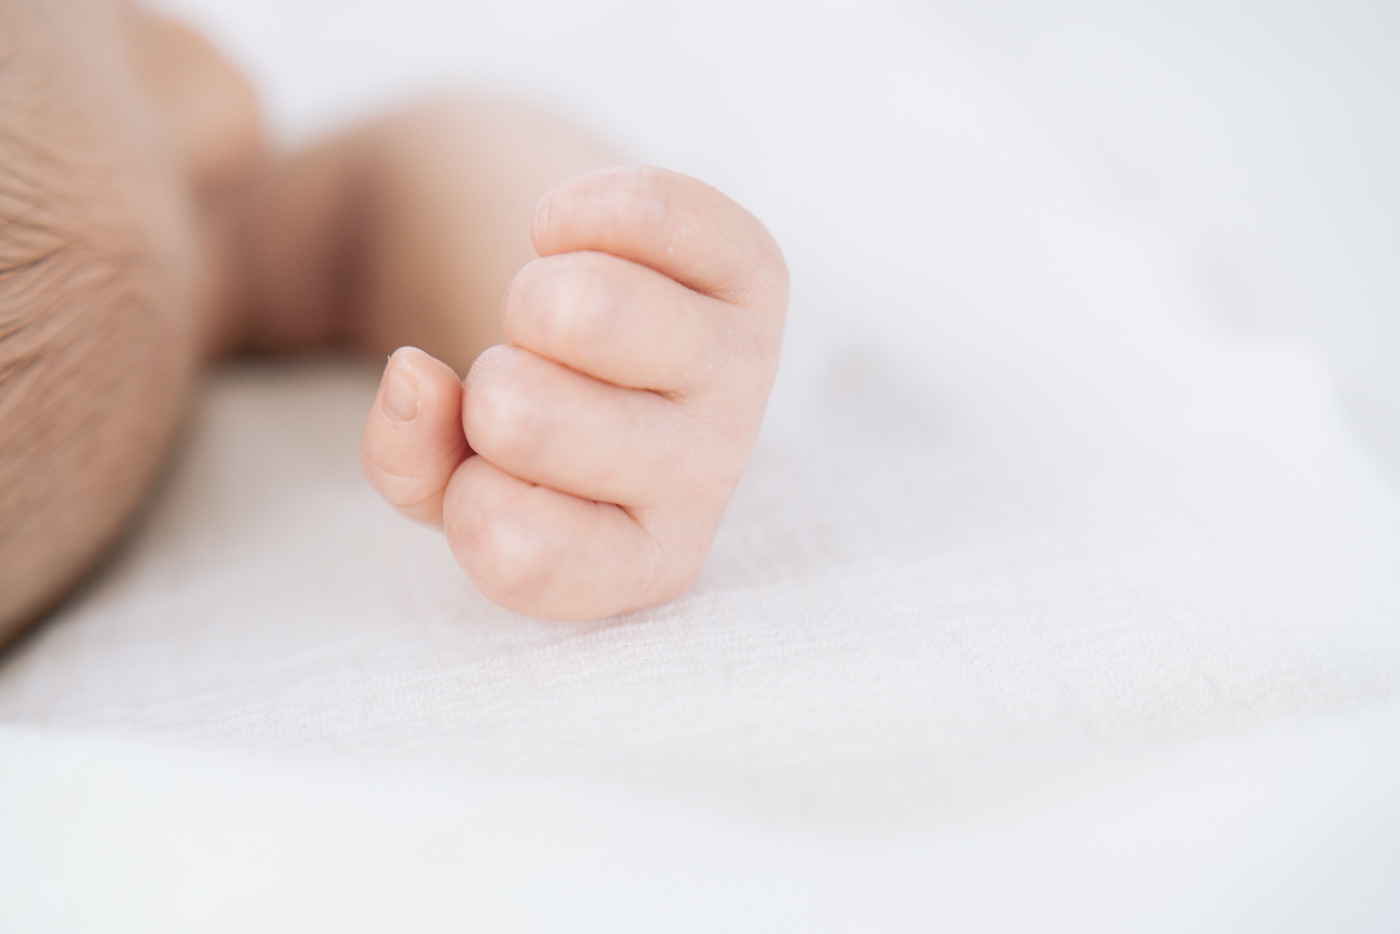 Newborn detail image of baby's hand. Photo by Asheville newborn photographer, Lauren Sosler Photography.